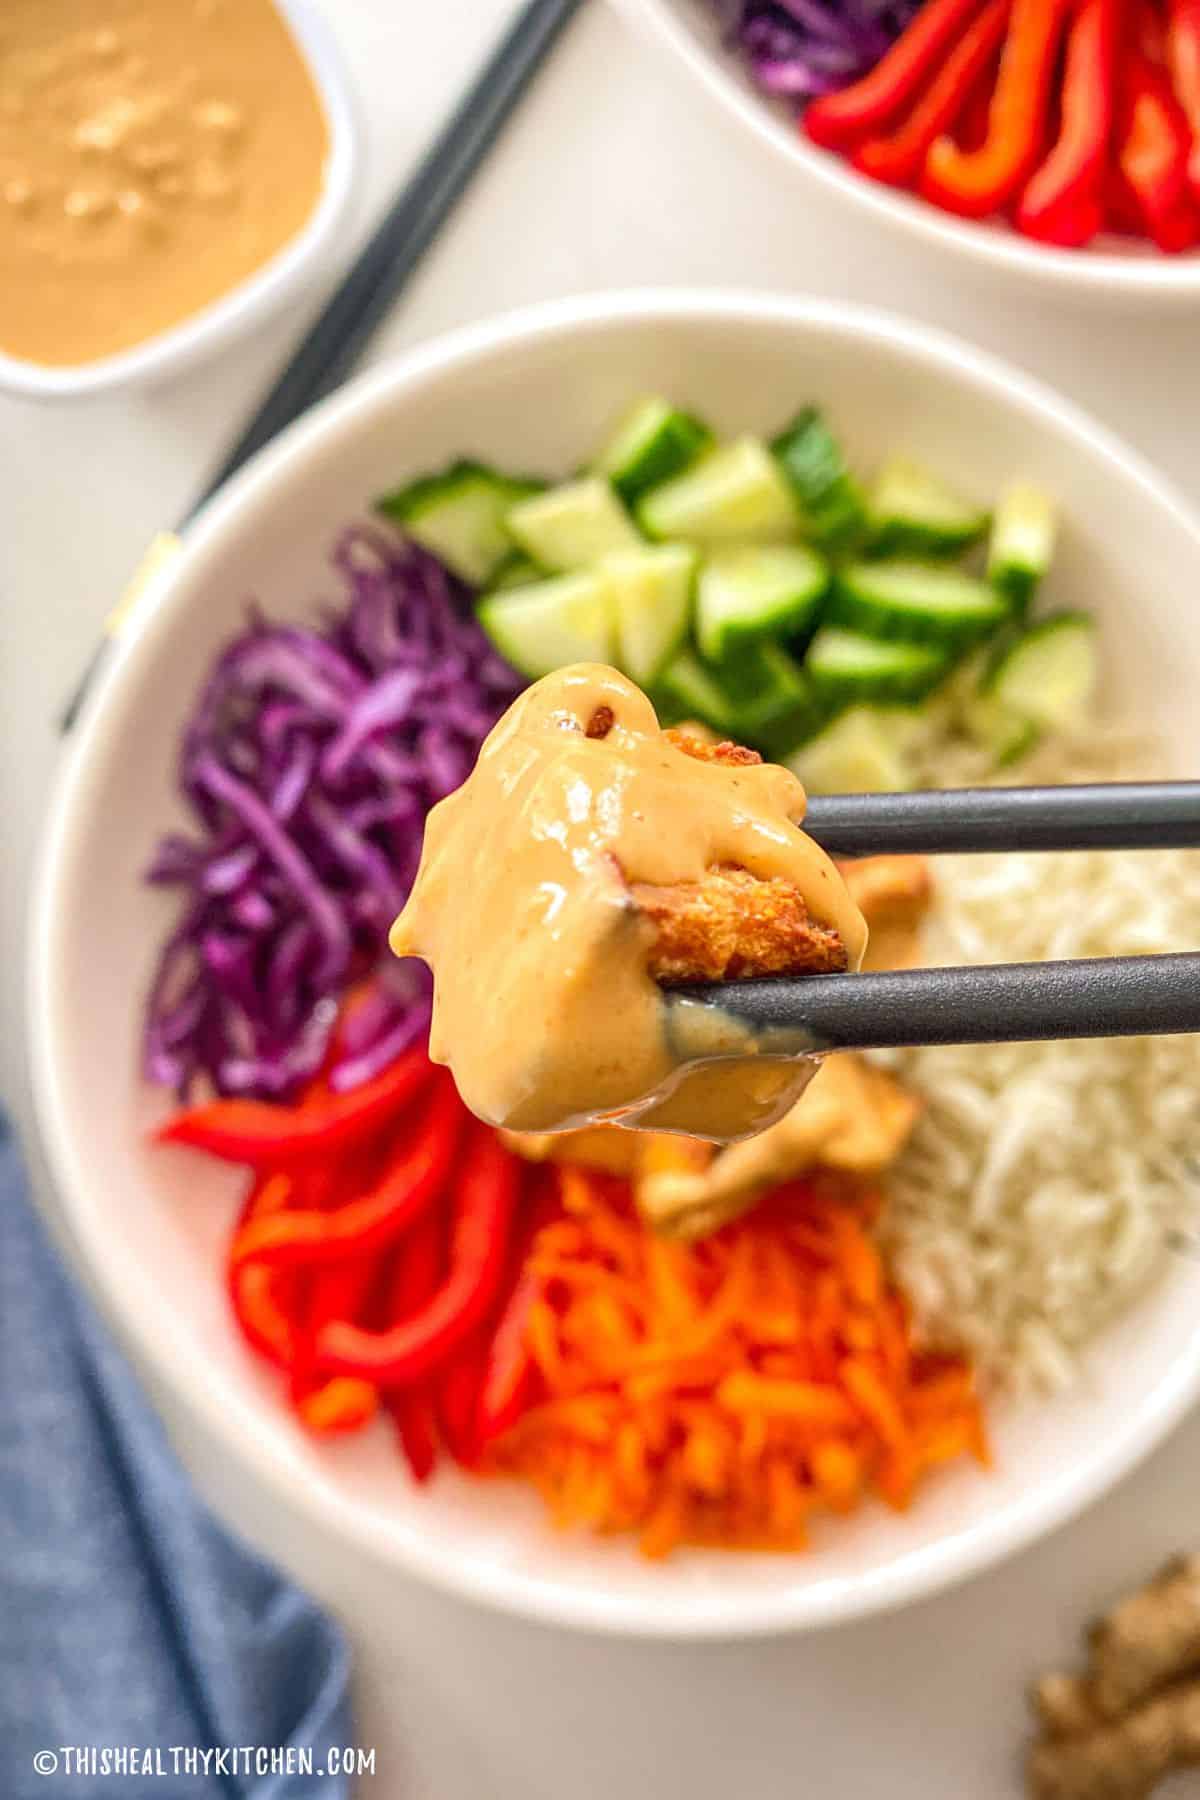 Chopsticks holding up tofu square with peanut sauce on top.